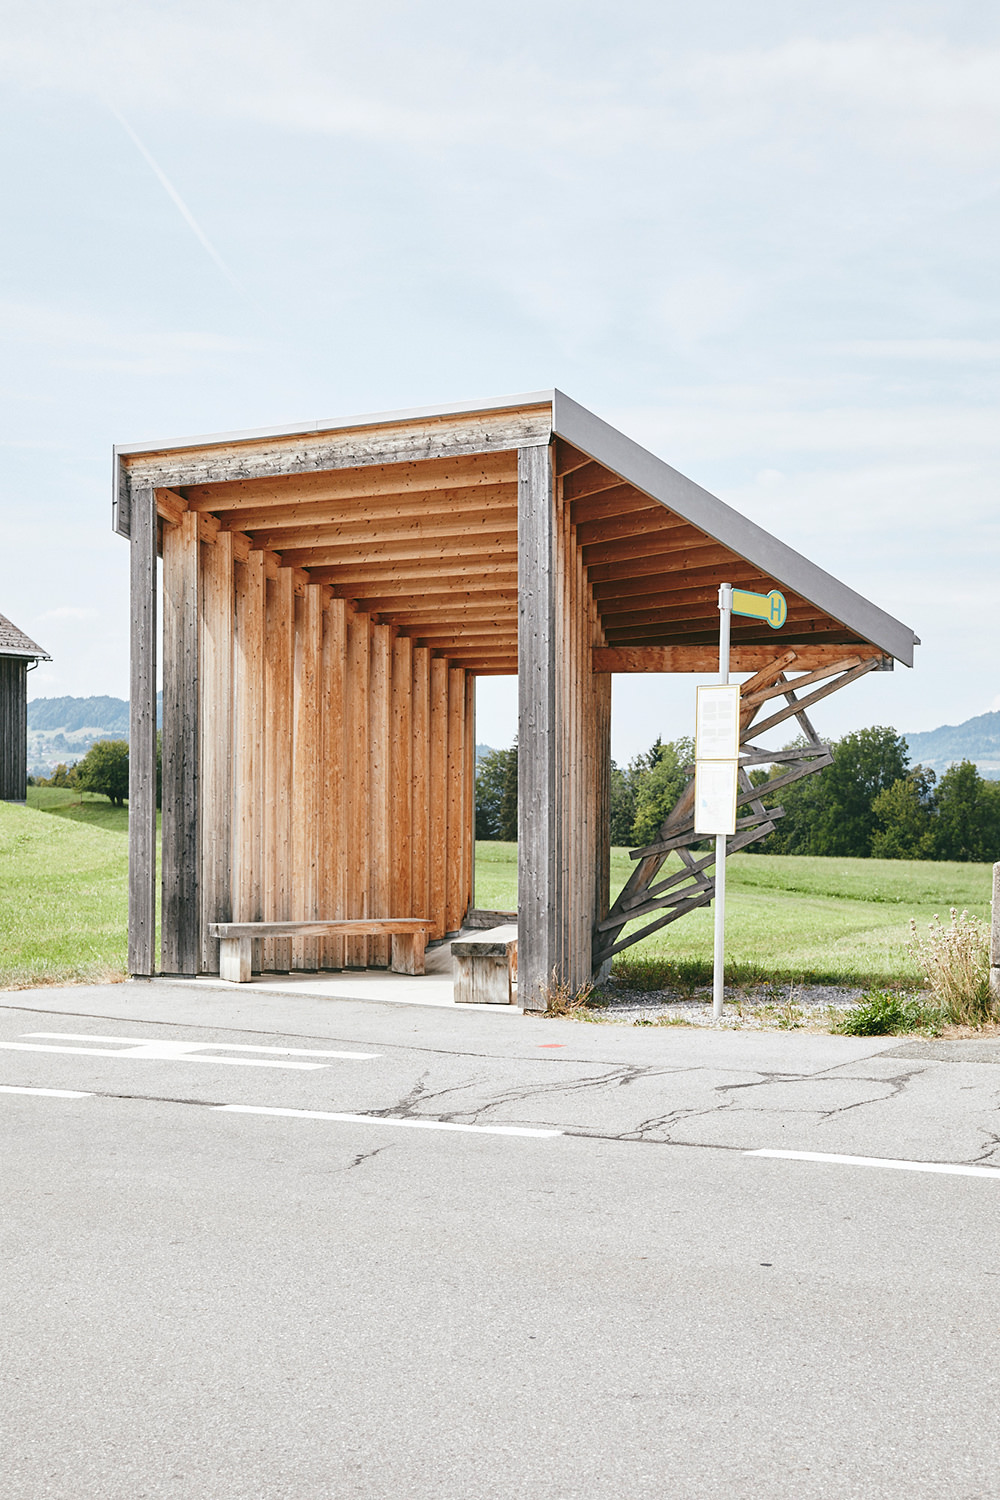 Architecture photography for corporate publishing Mazda magazine in Austria